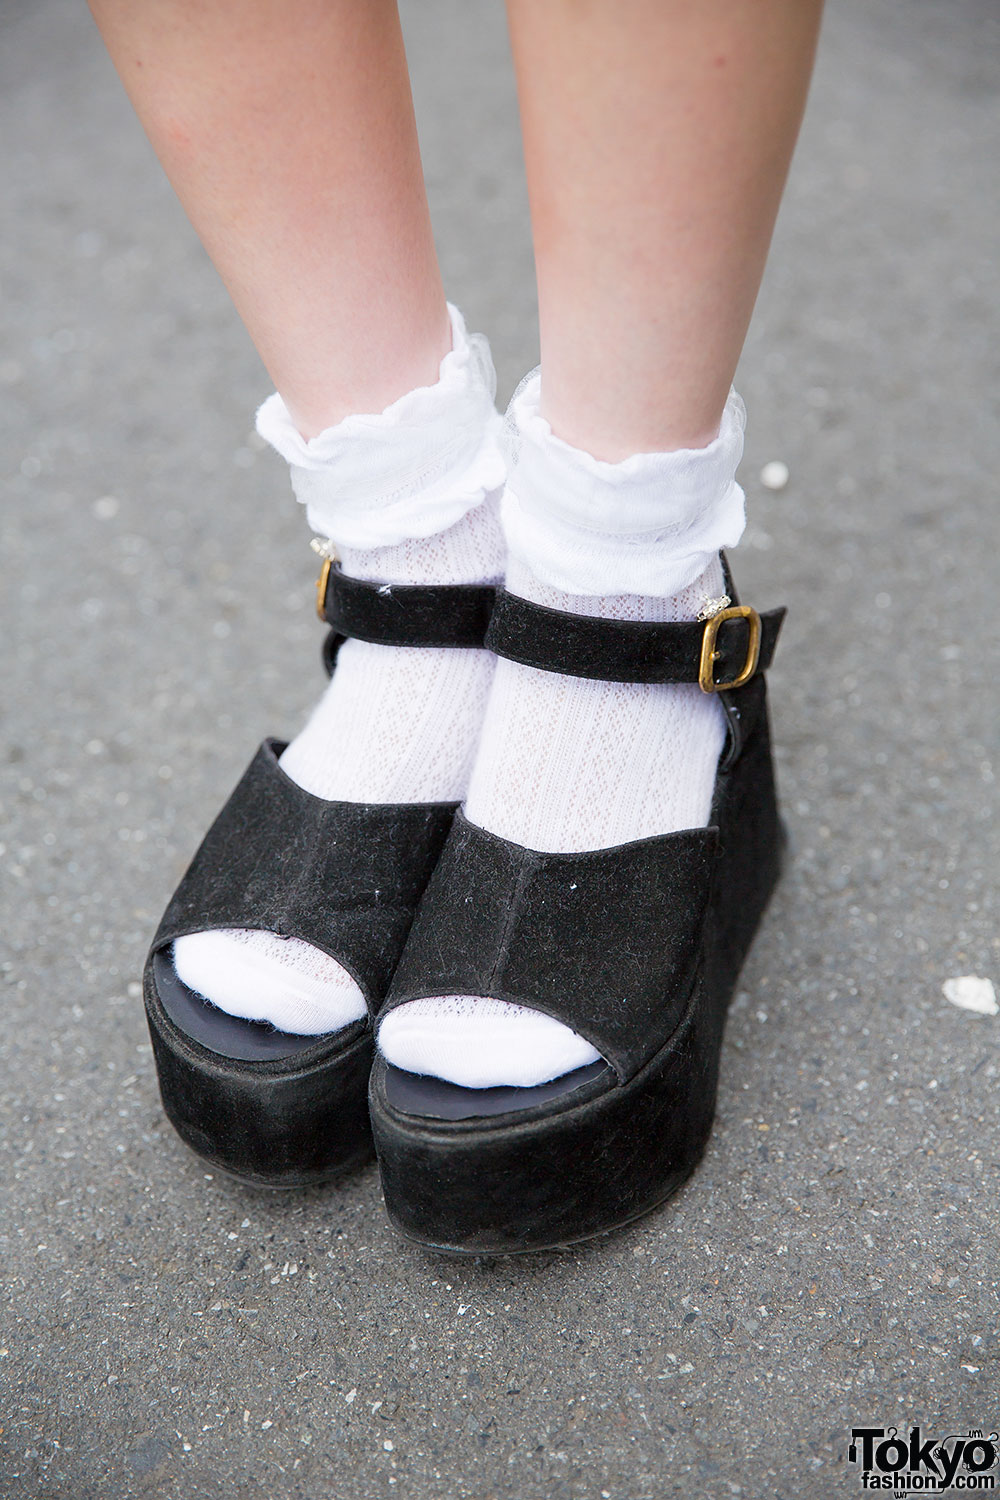 Harajuku Girls in Platform Shoes w/ Miauler Mew, Ingni & One Spo